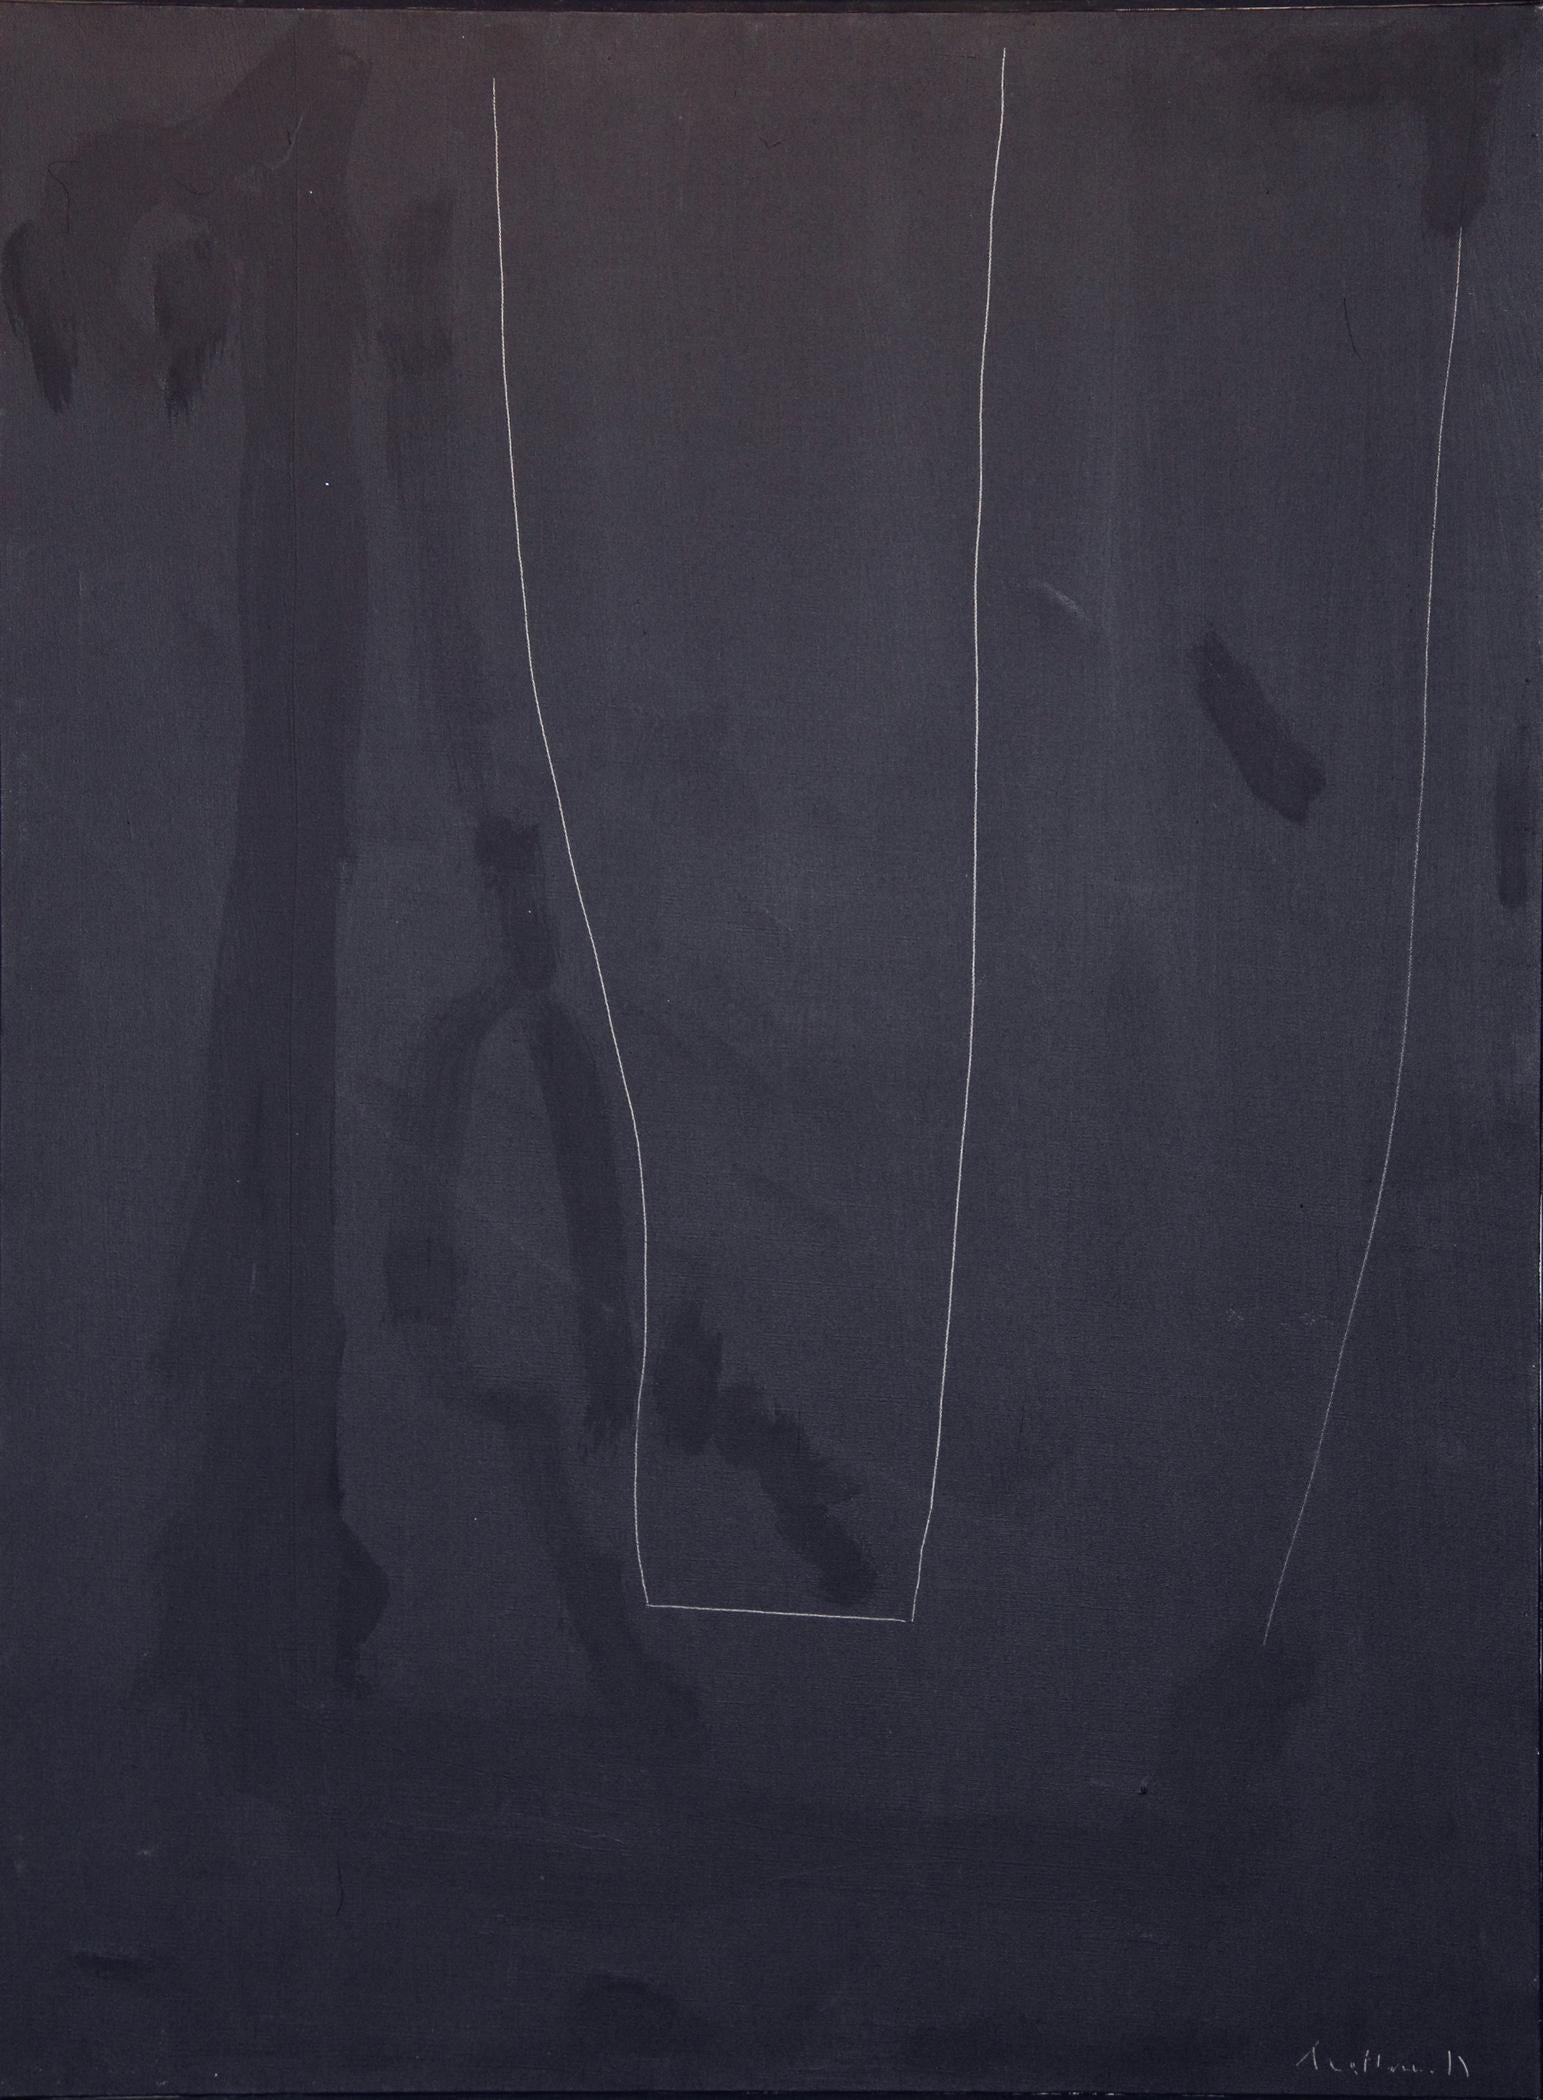 Abstract Painting Robert Motherwell - Alberti Suite n° 8 